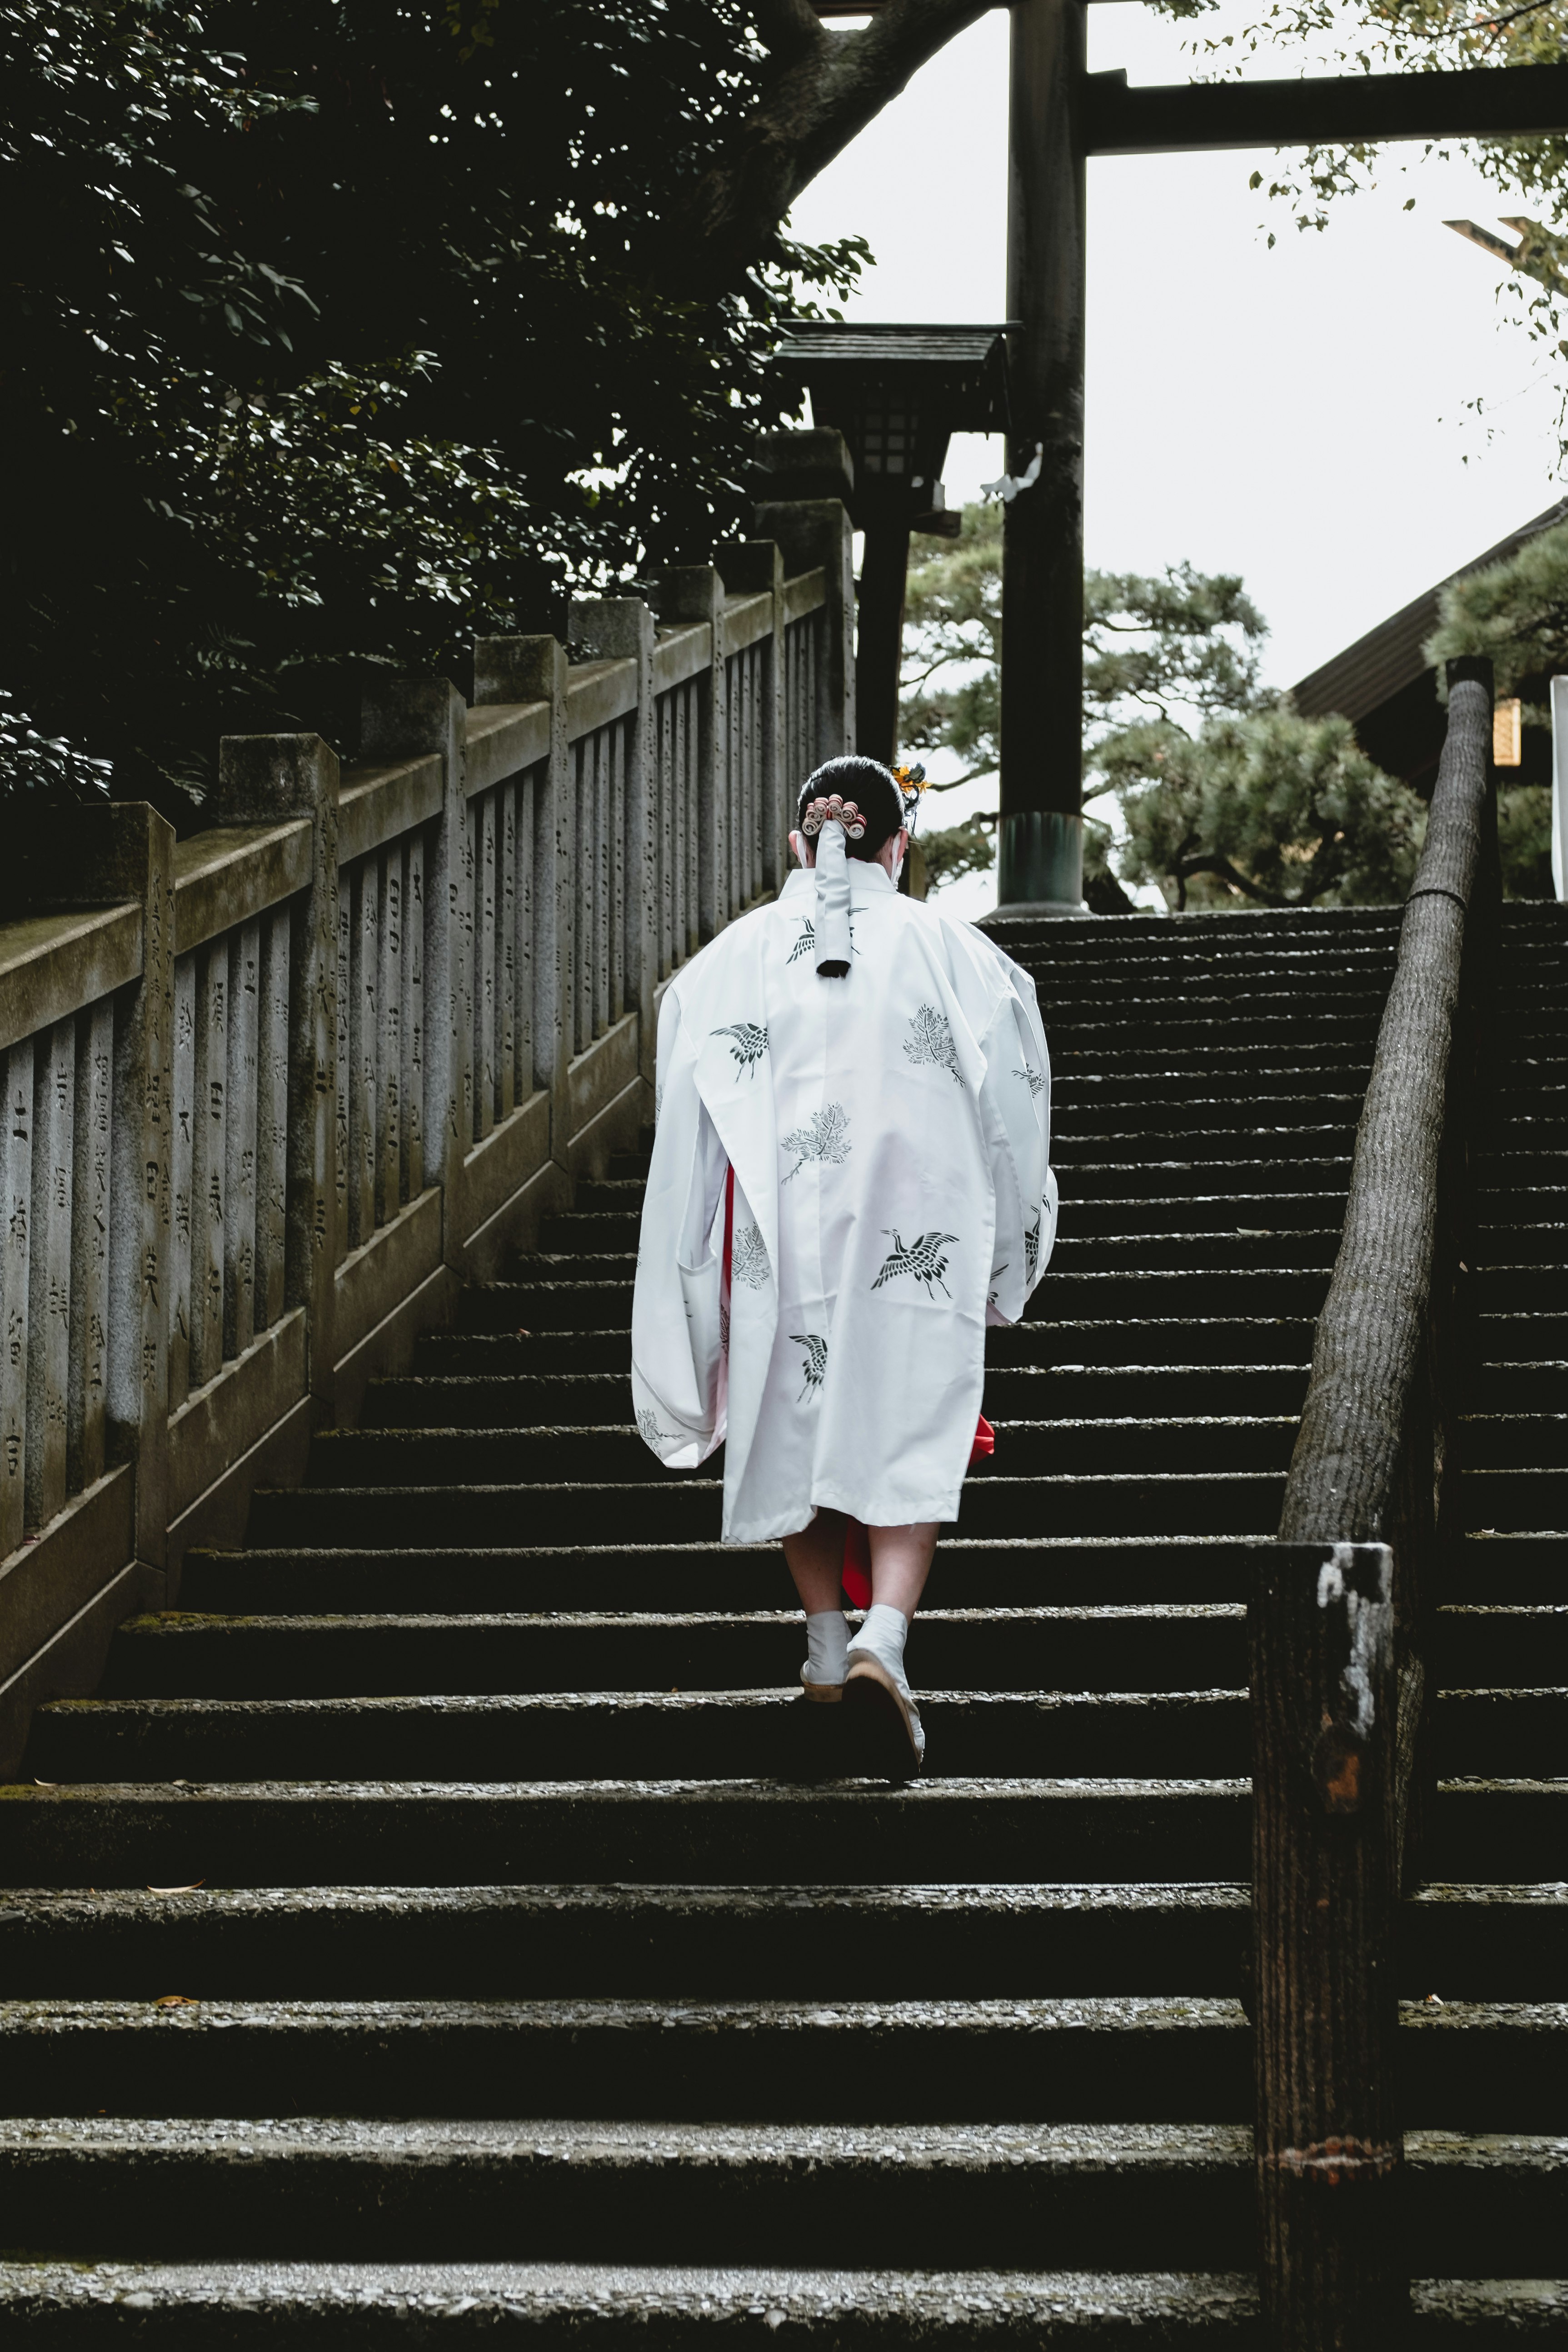 man in white robe walking on black staircase